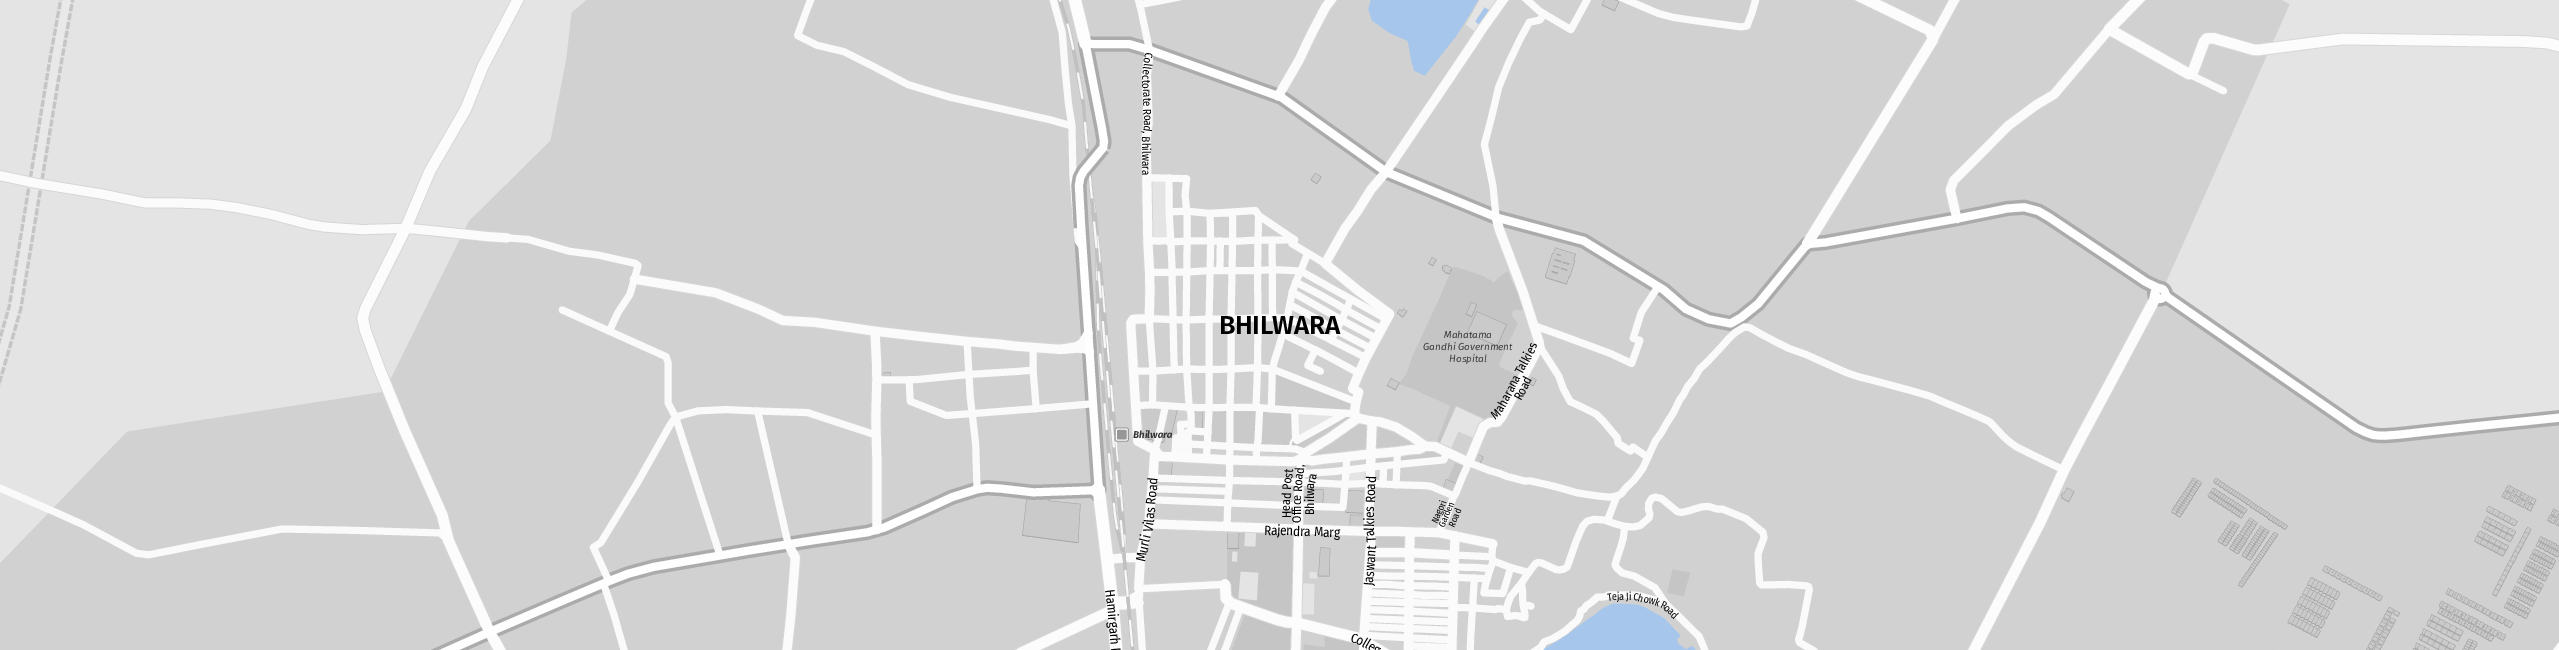 Stadtplan Bhilwara zum Downloaden.